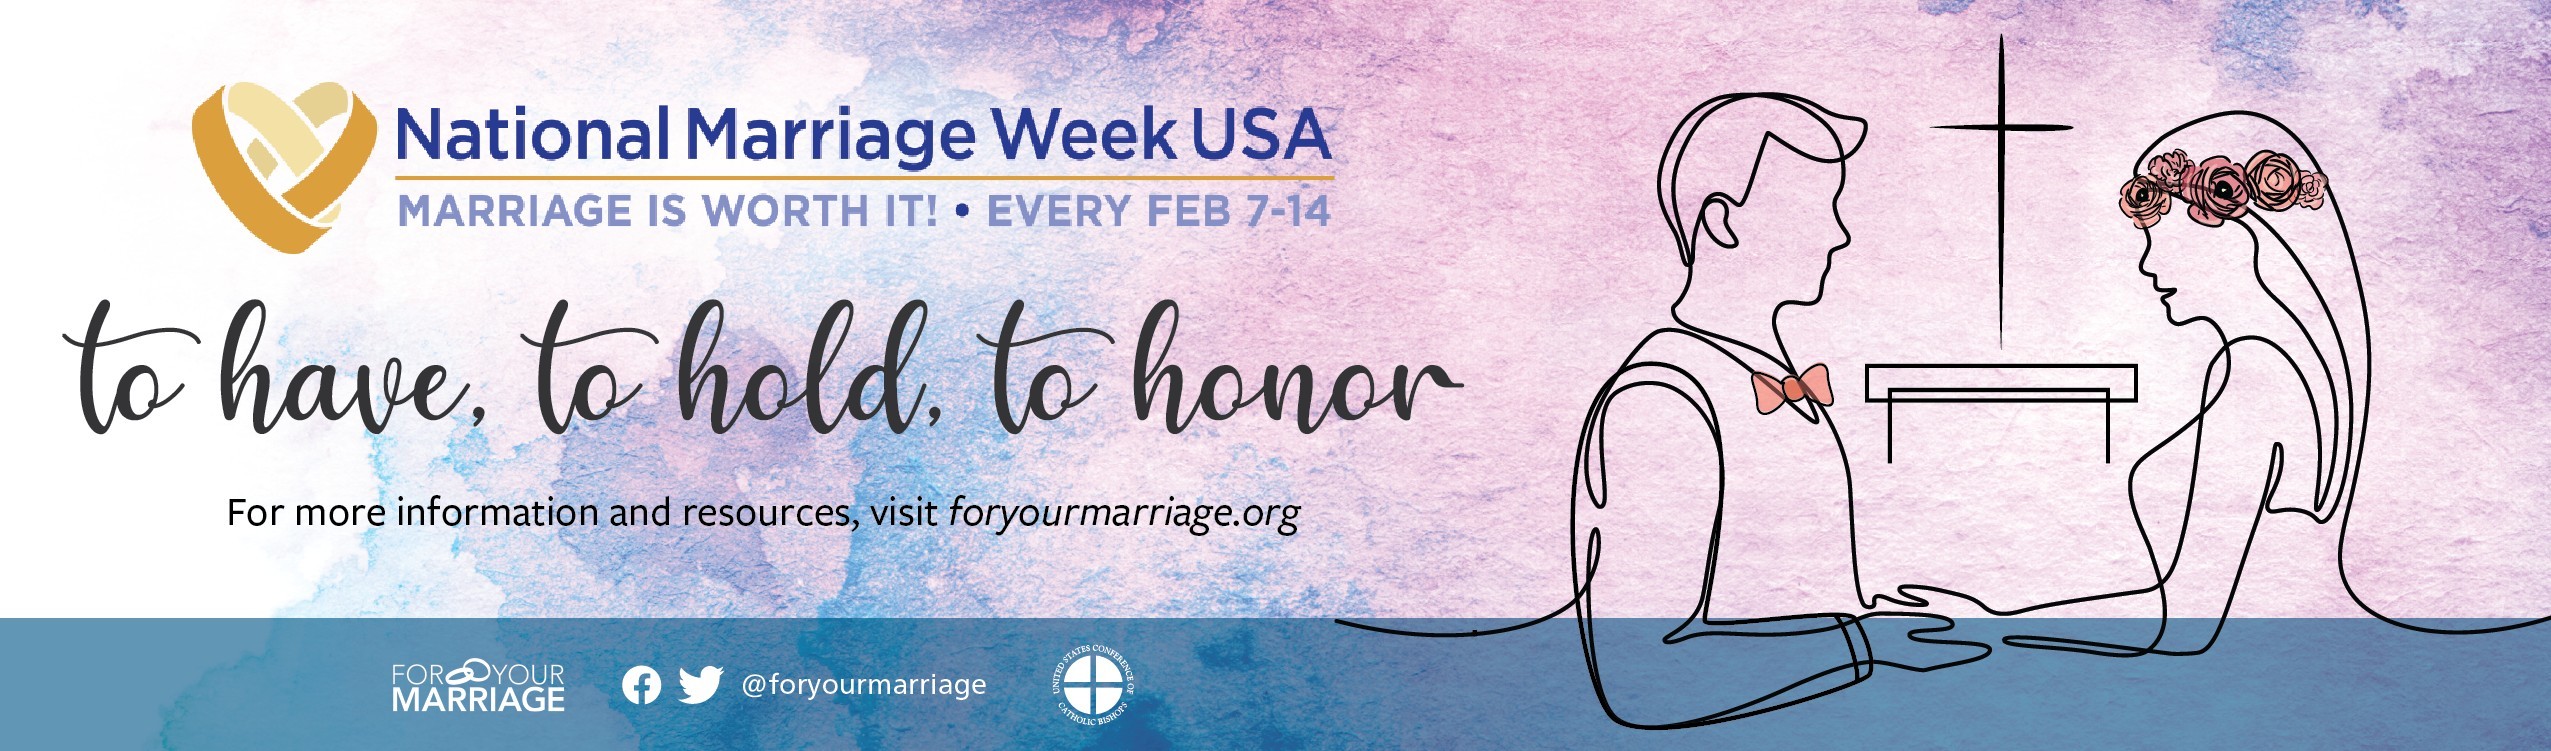 National Marriage Week USCCB